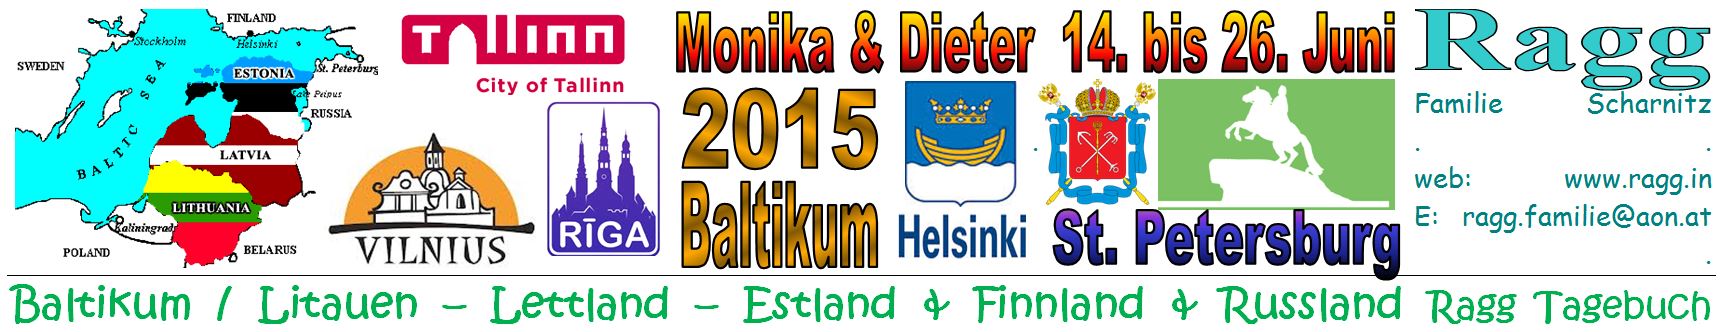 ragg 2015-06-14 -- 06-26 - Baltikum - diary GA - Kopfzeile 00